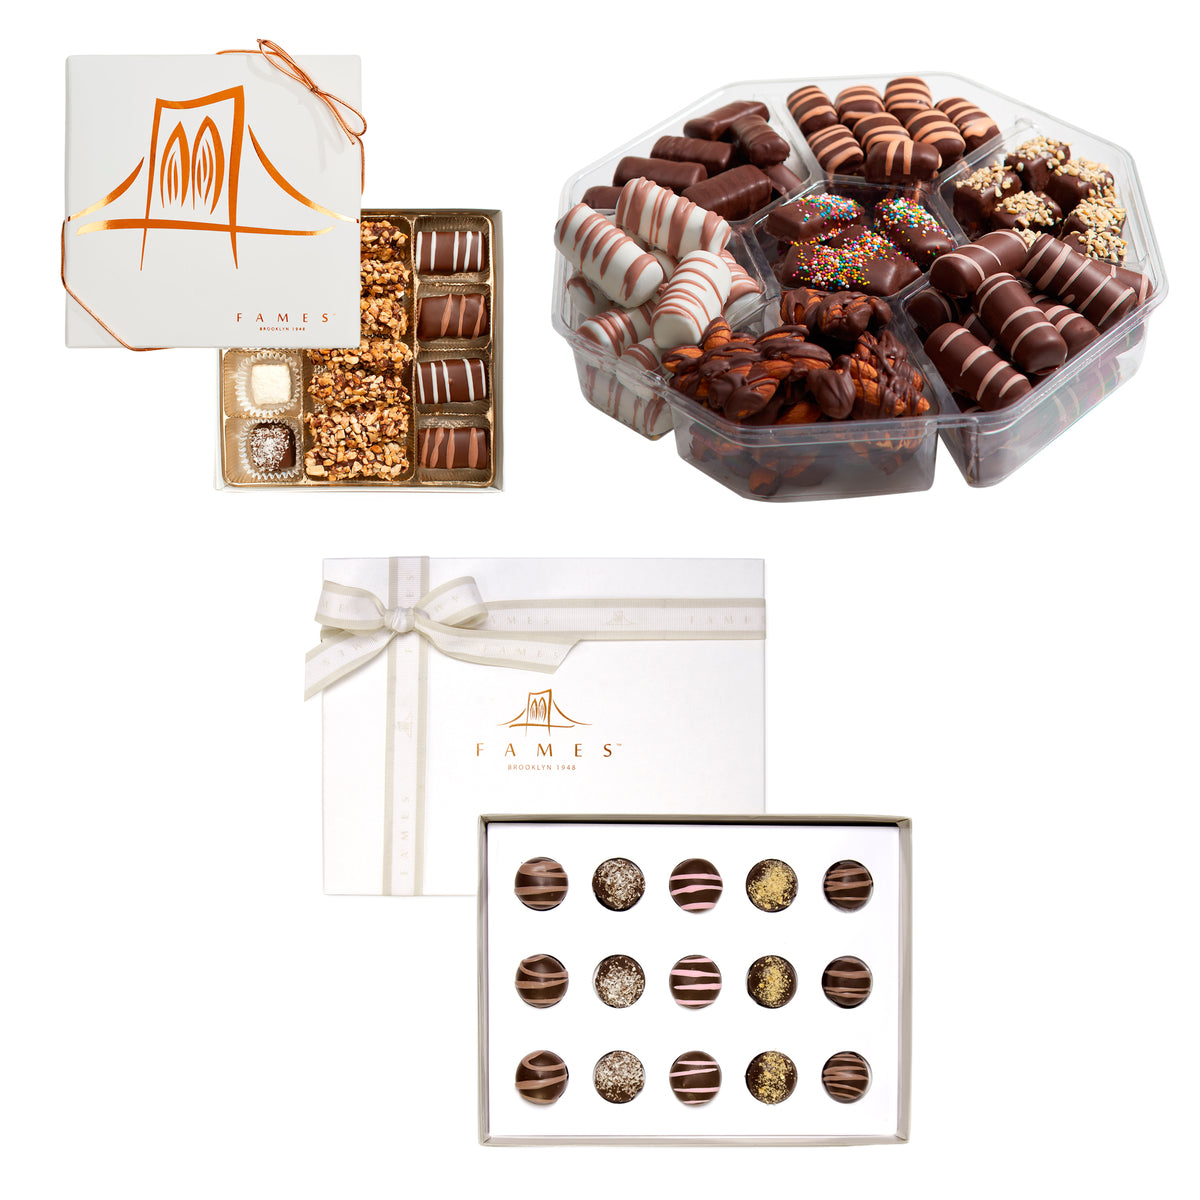 Sympathy Gift Baskets Kosher Chocolate - Friend, Sympathy, Condolences Gift Set  Fames Chocolate